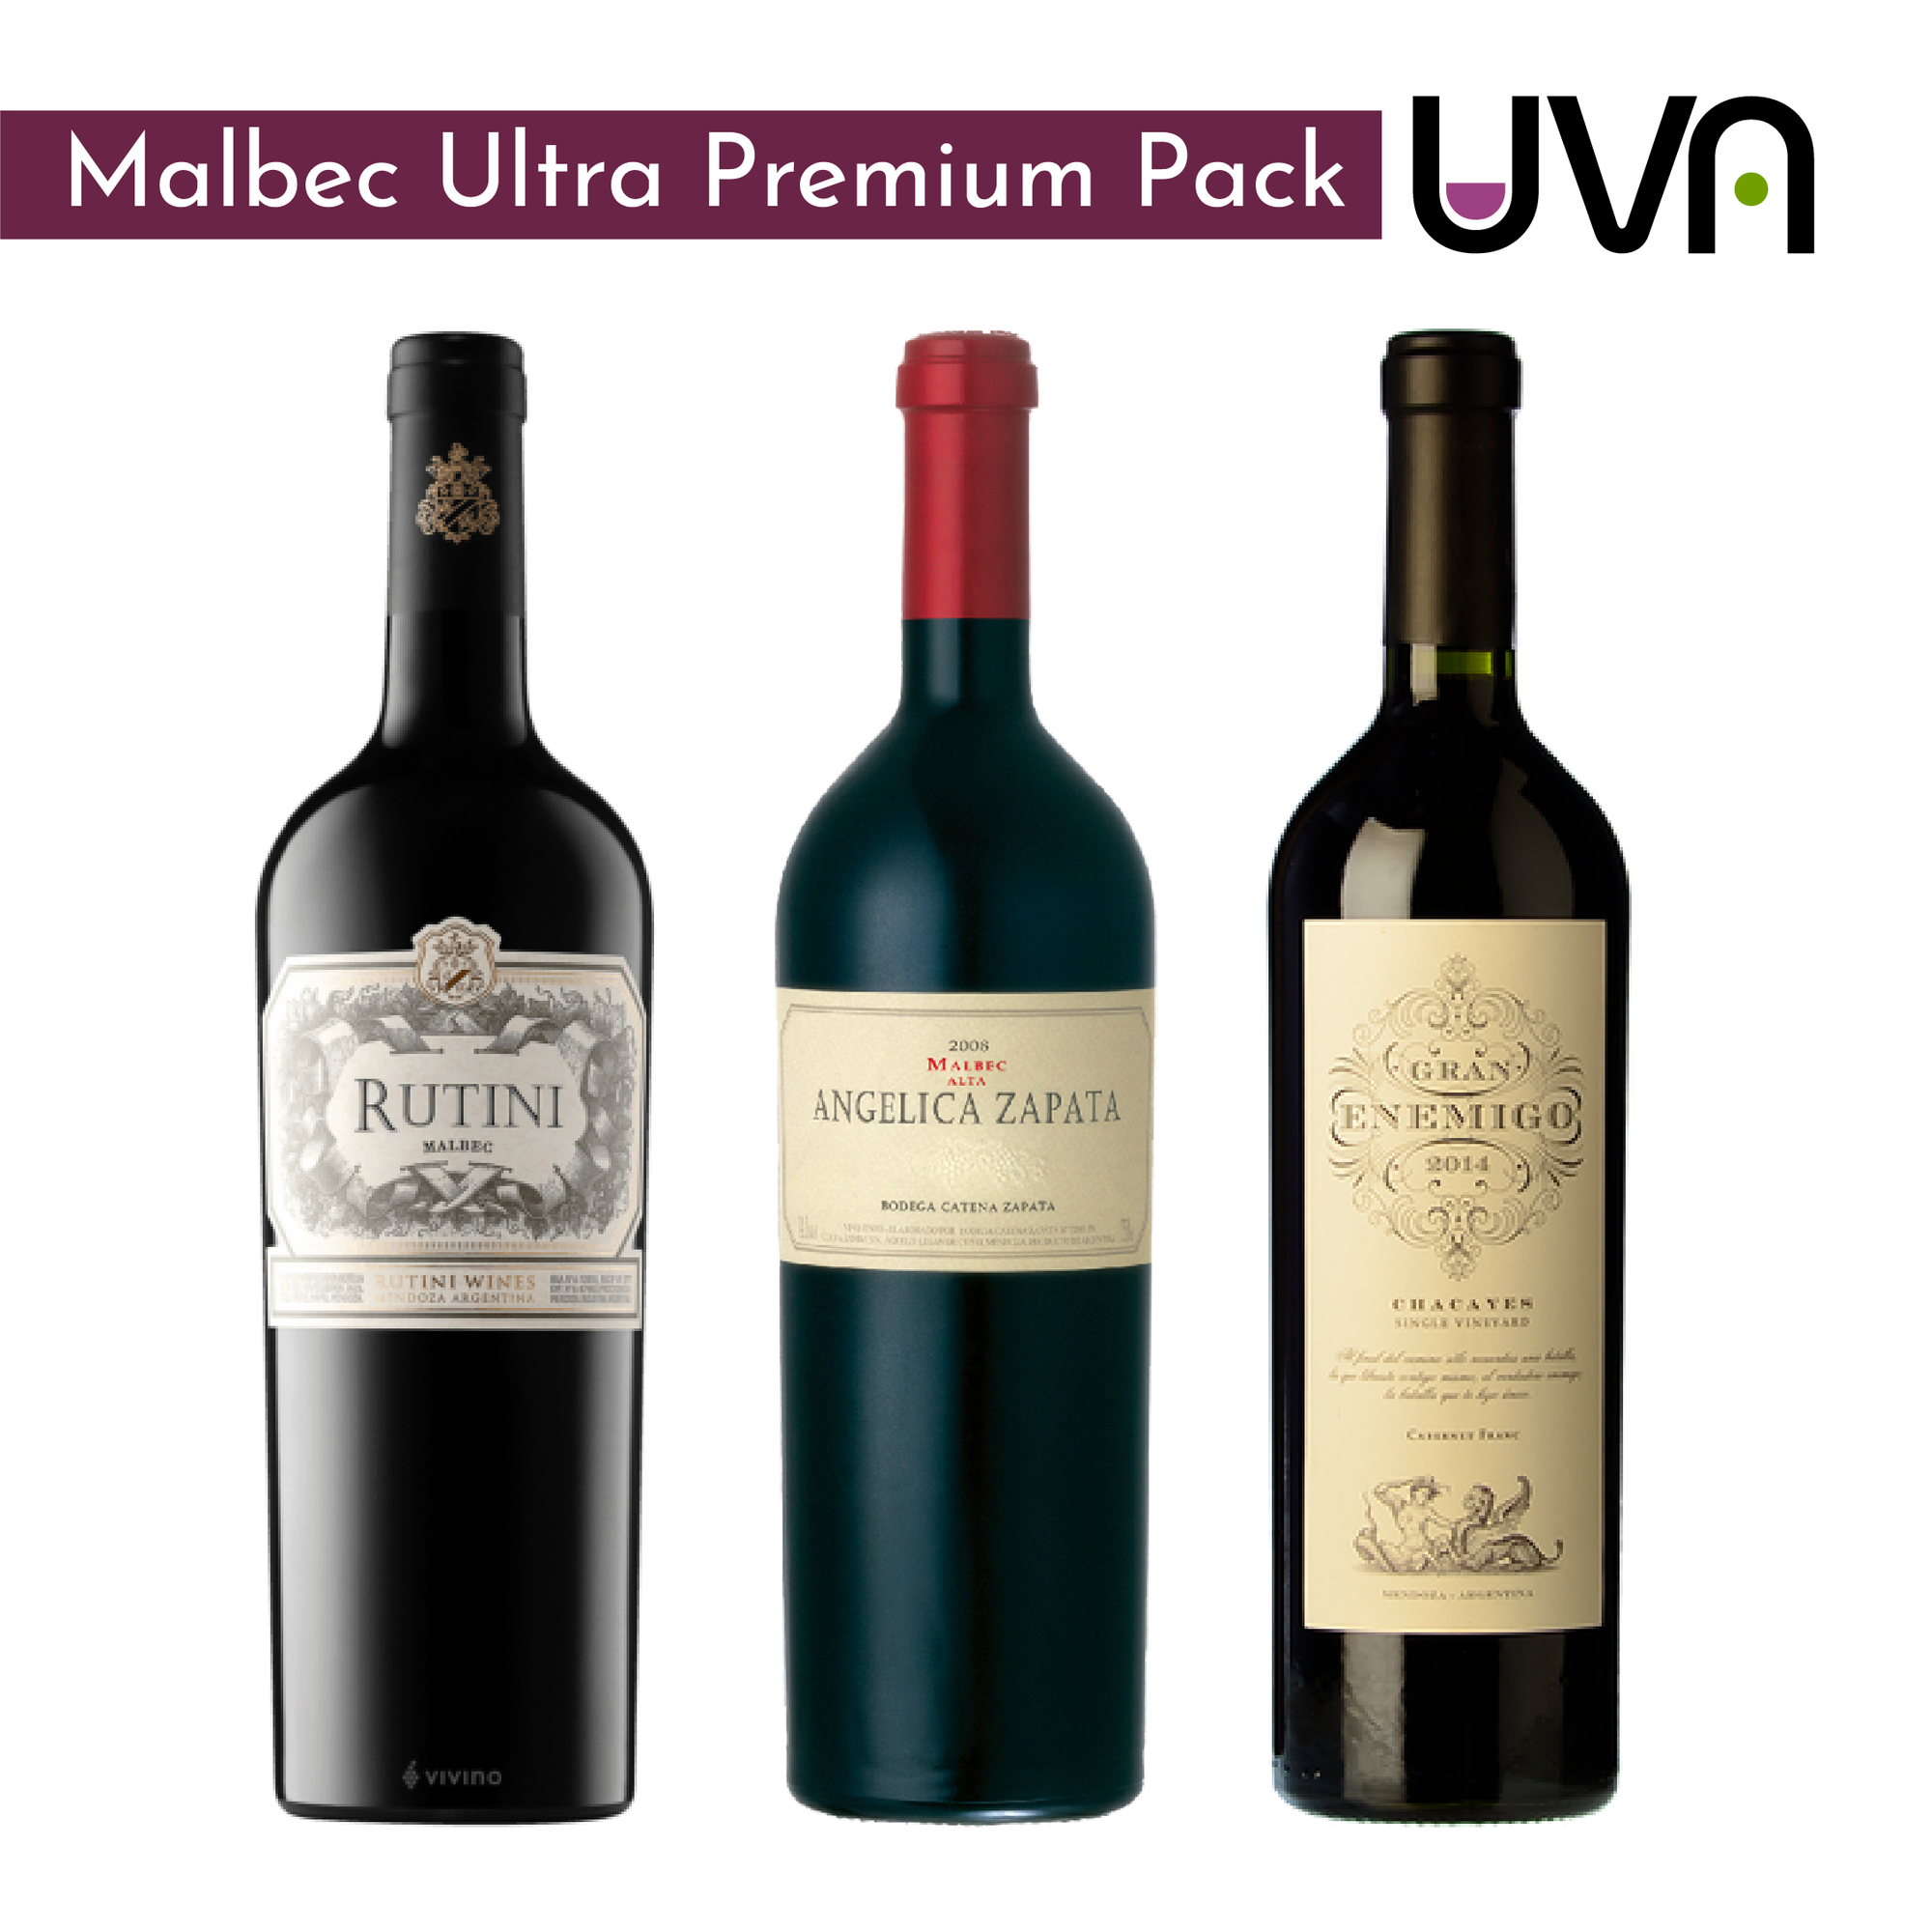 Malbec Ultra Premium Pack